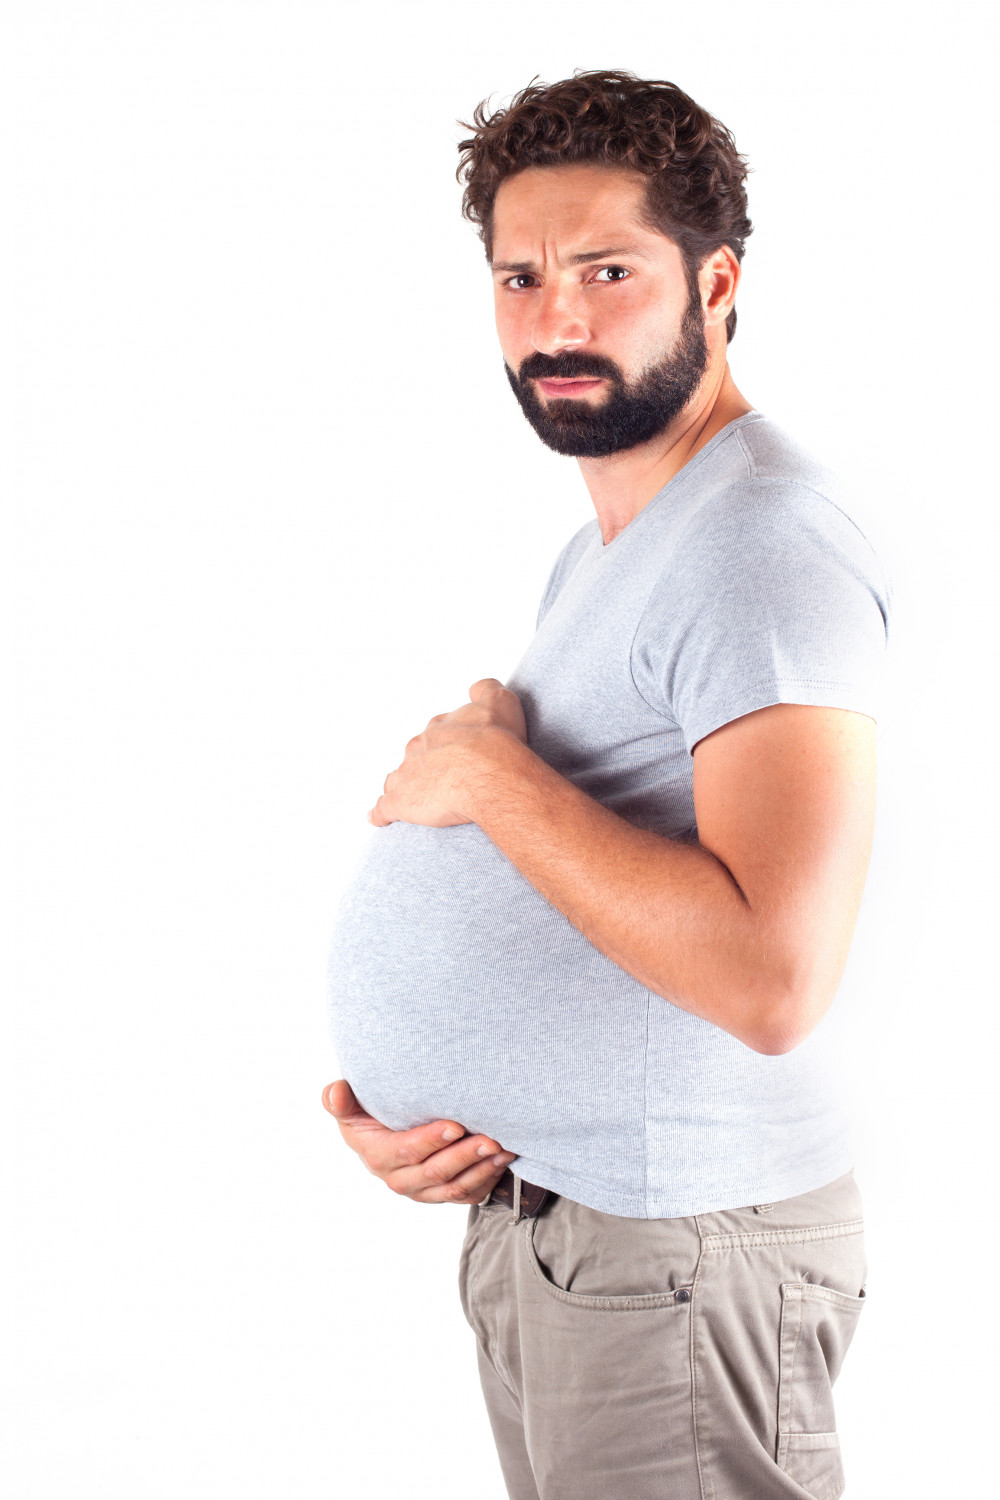 Can Men Endure the Pain of Childbirth? - BellaNaija